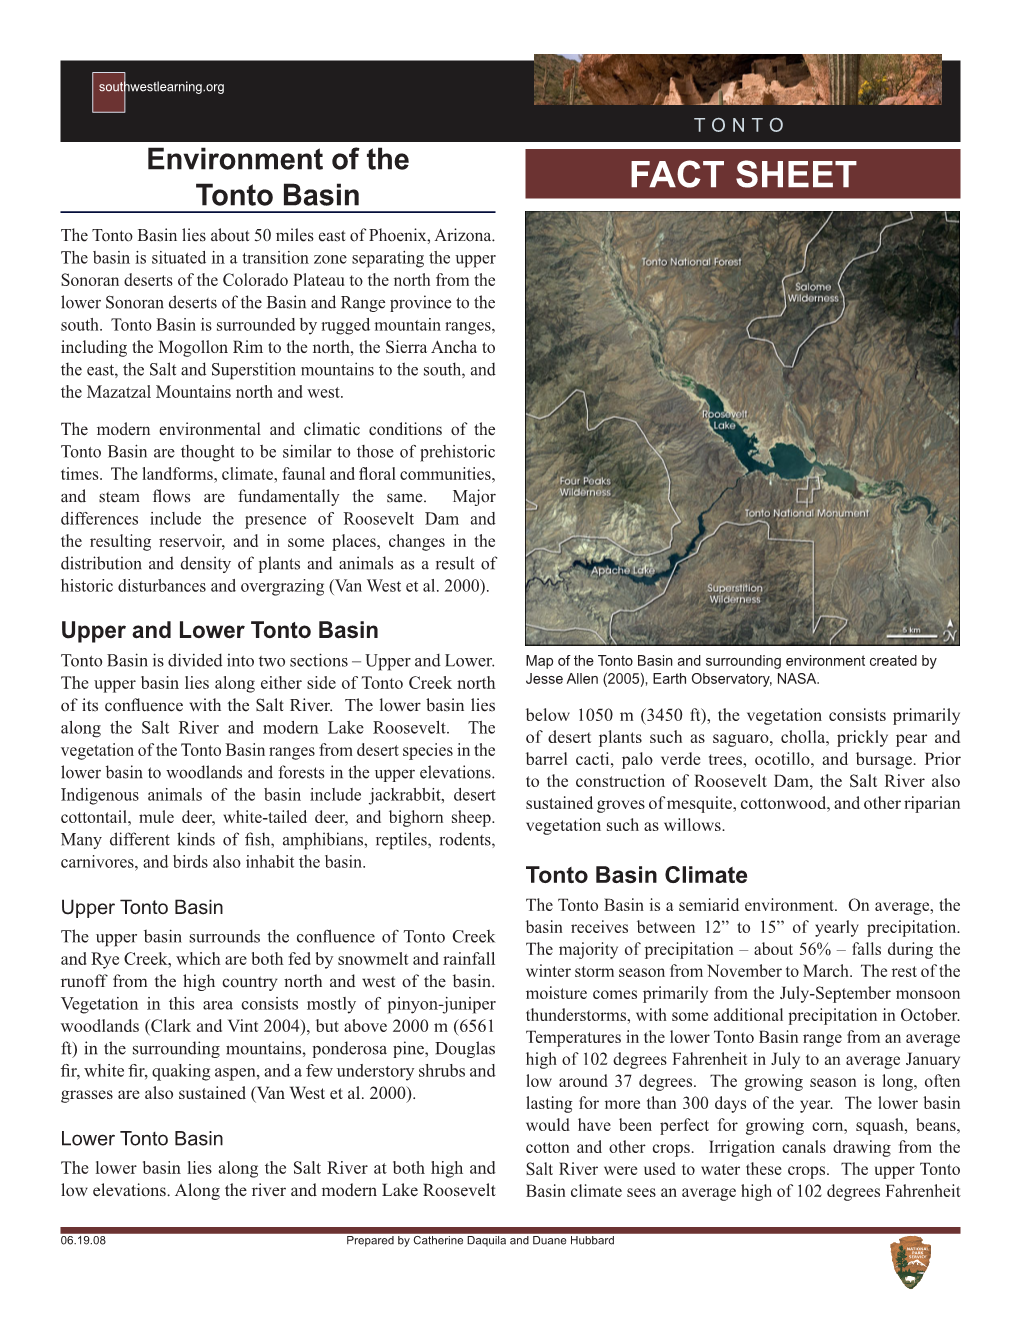 FACT SHEET Tonto Basin the Tonto Basin Lies About 50 Miles East of Phoenix, Arizona